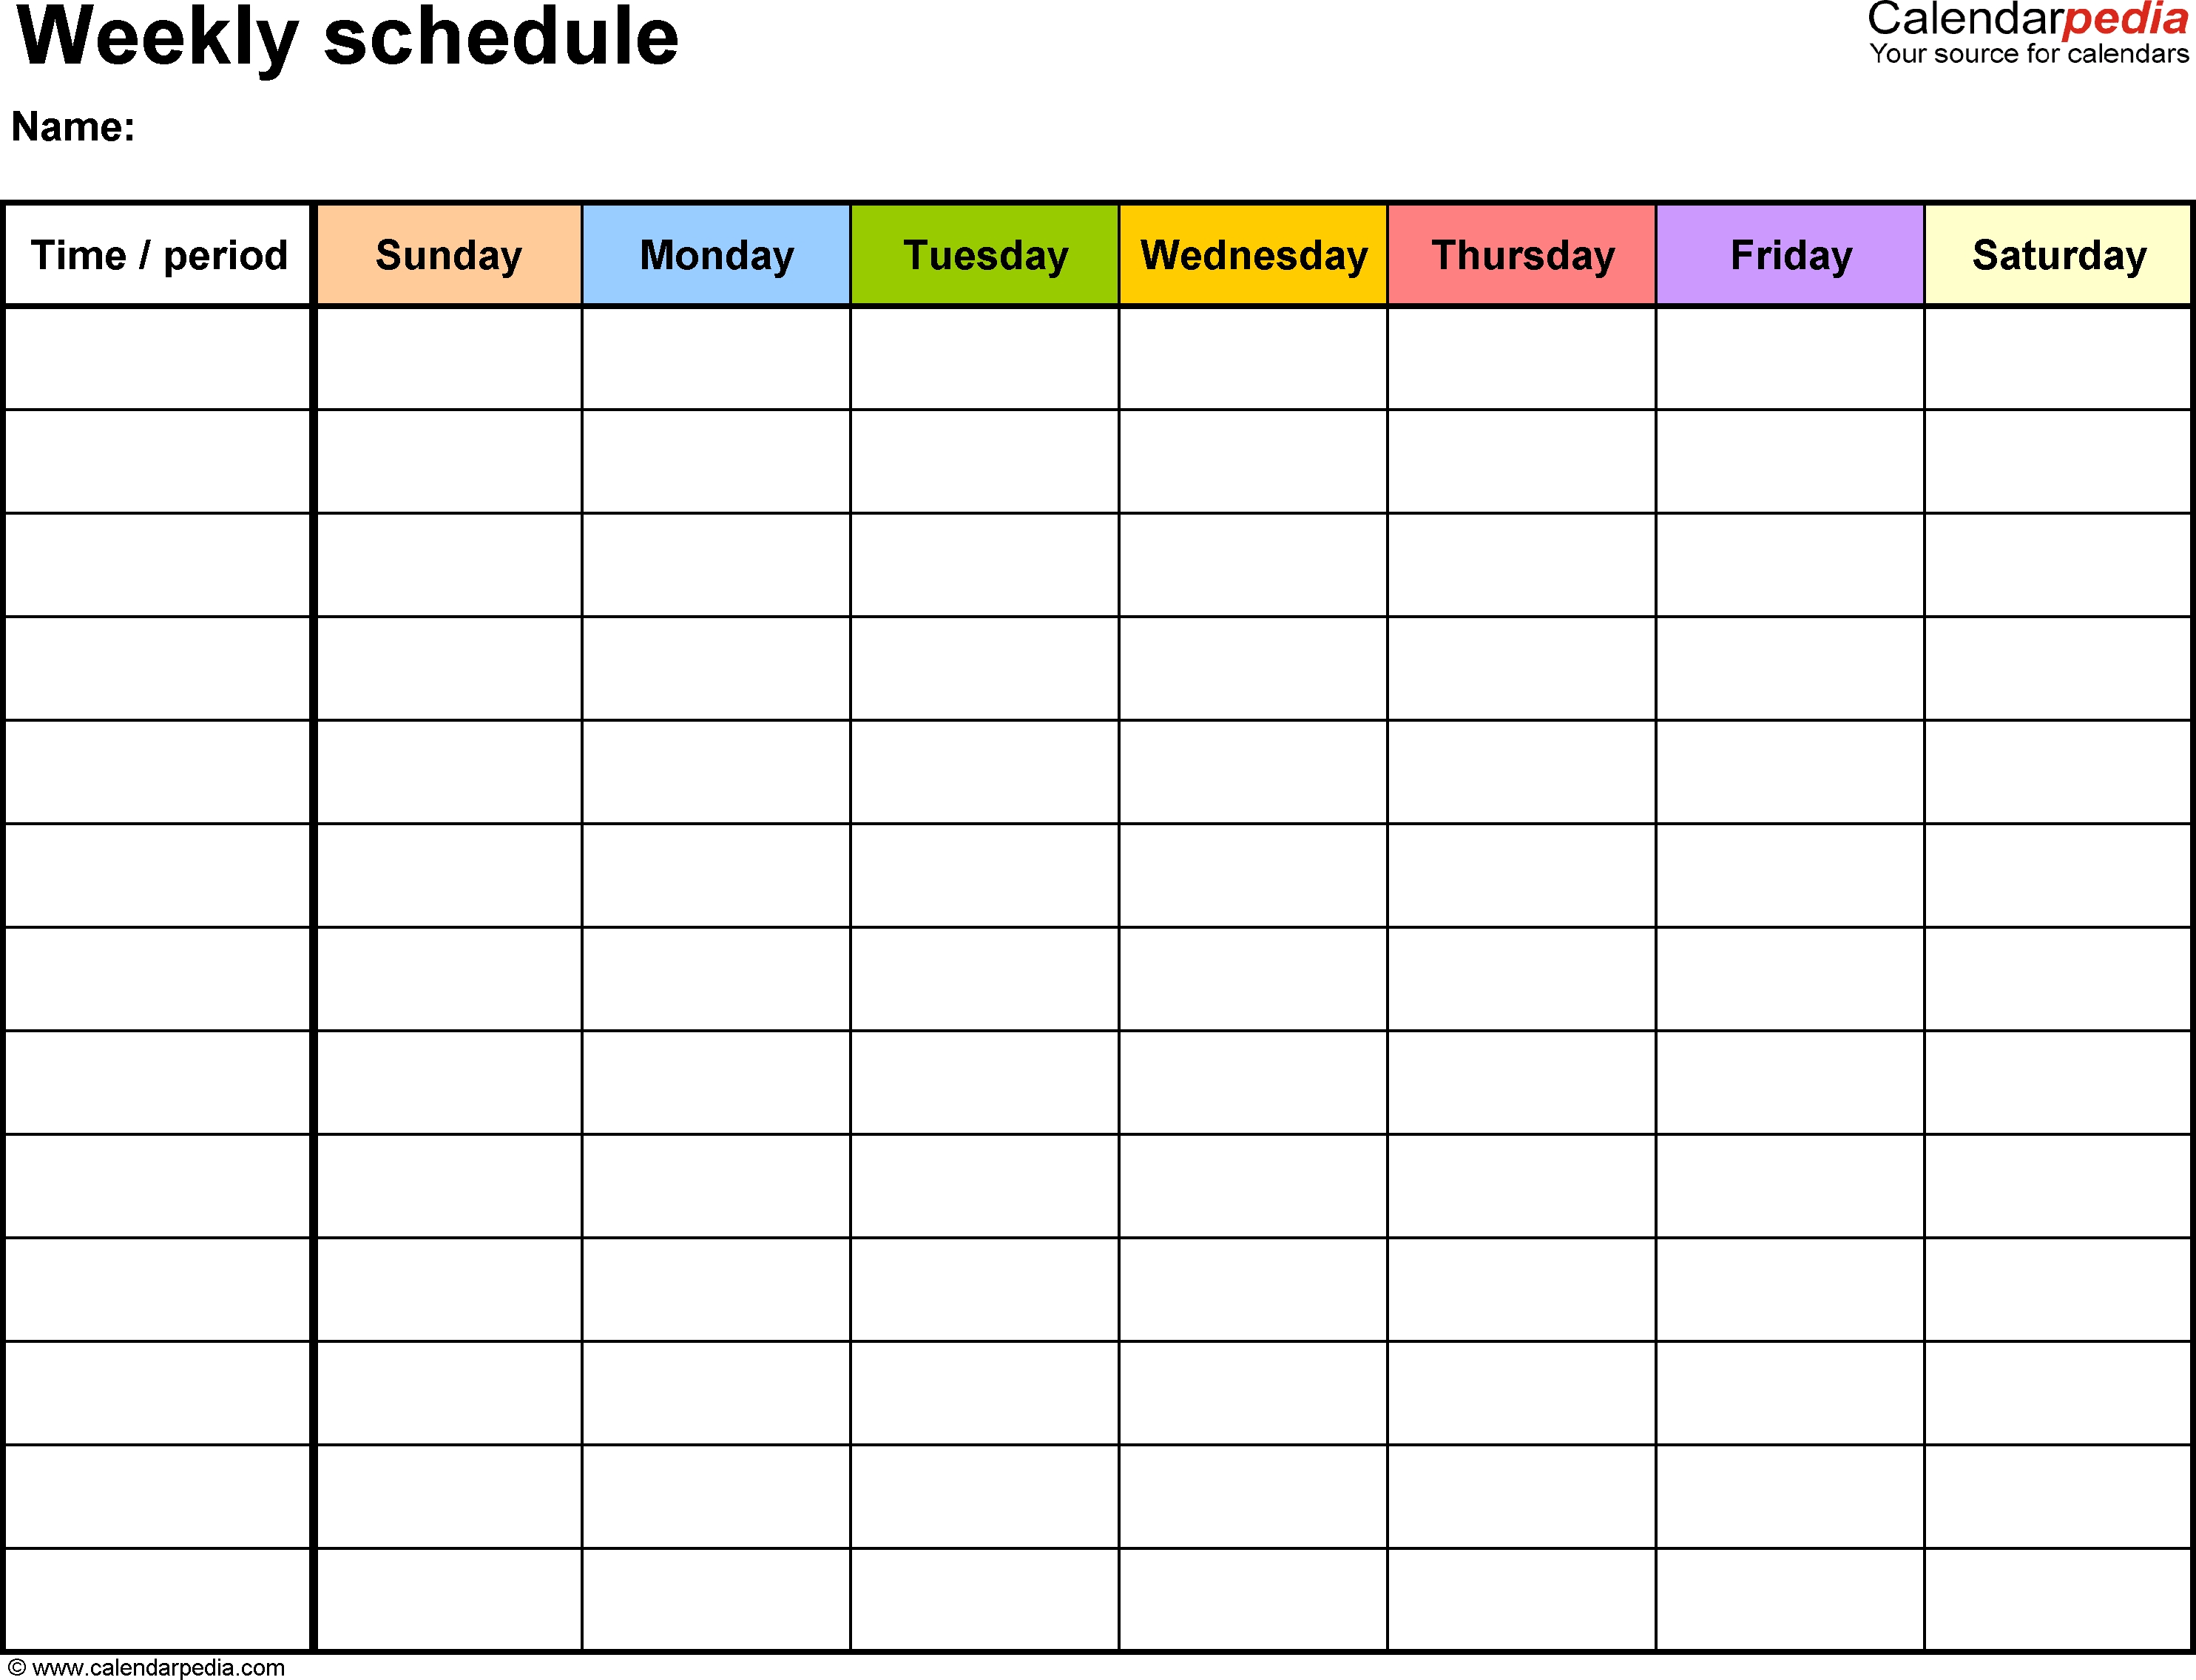 Free Weekly Schedule Templates For Excel - 18 Templates  6 Week Printable Blank Calendar